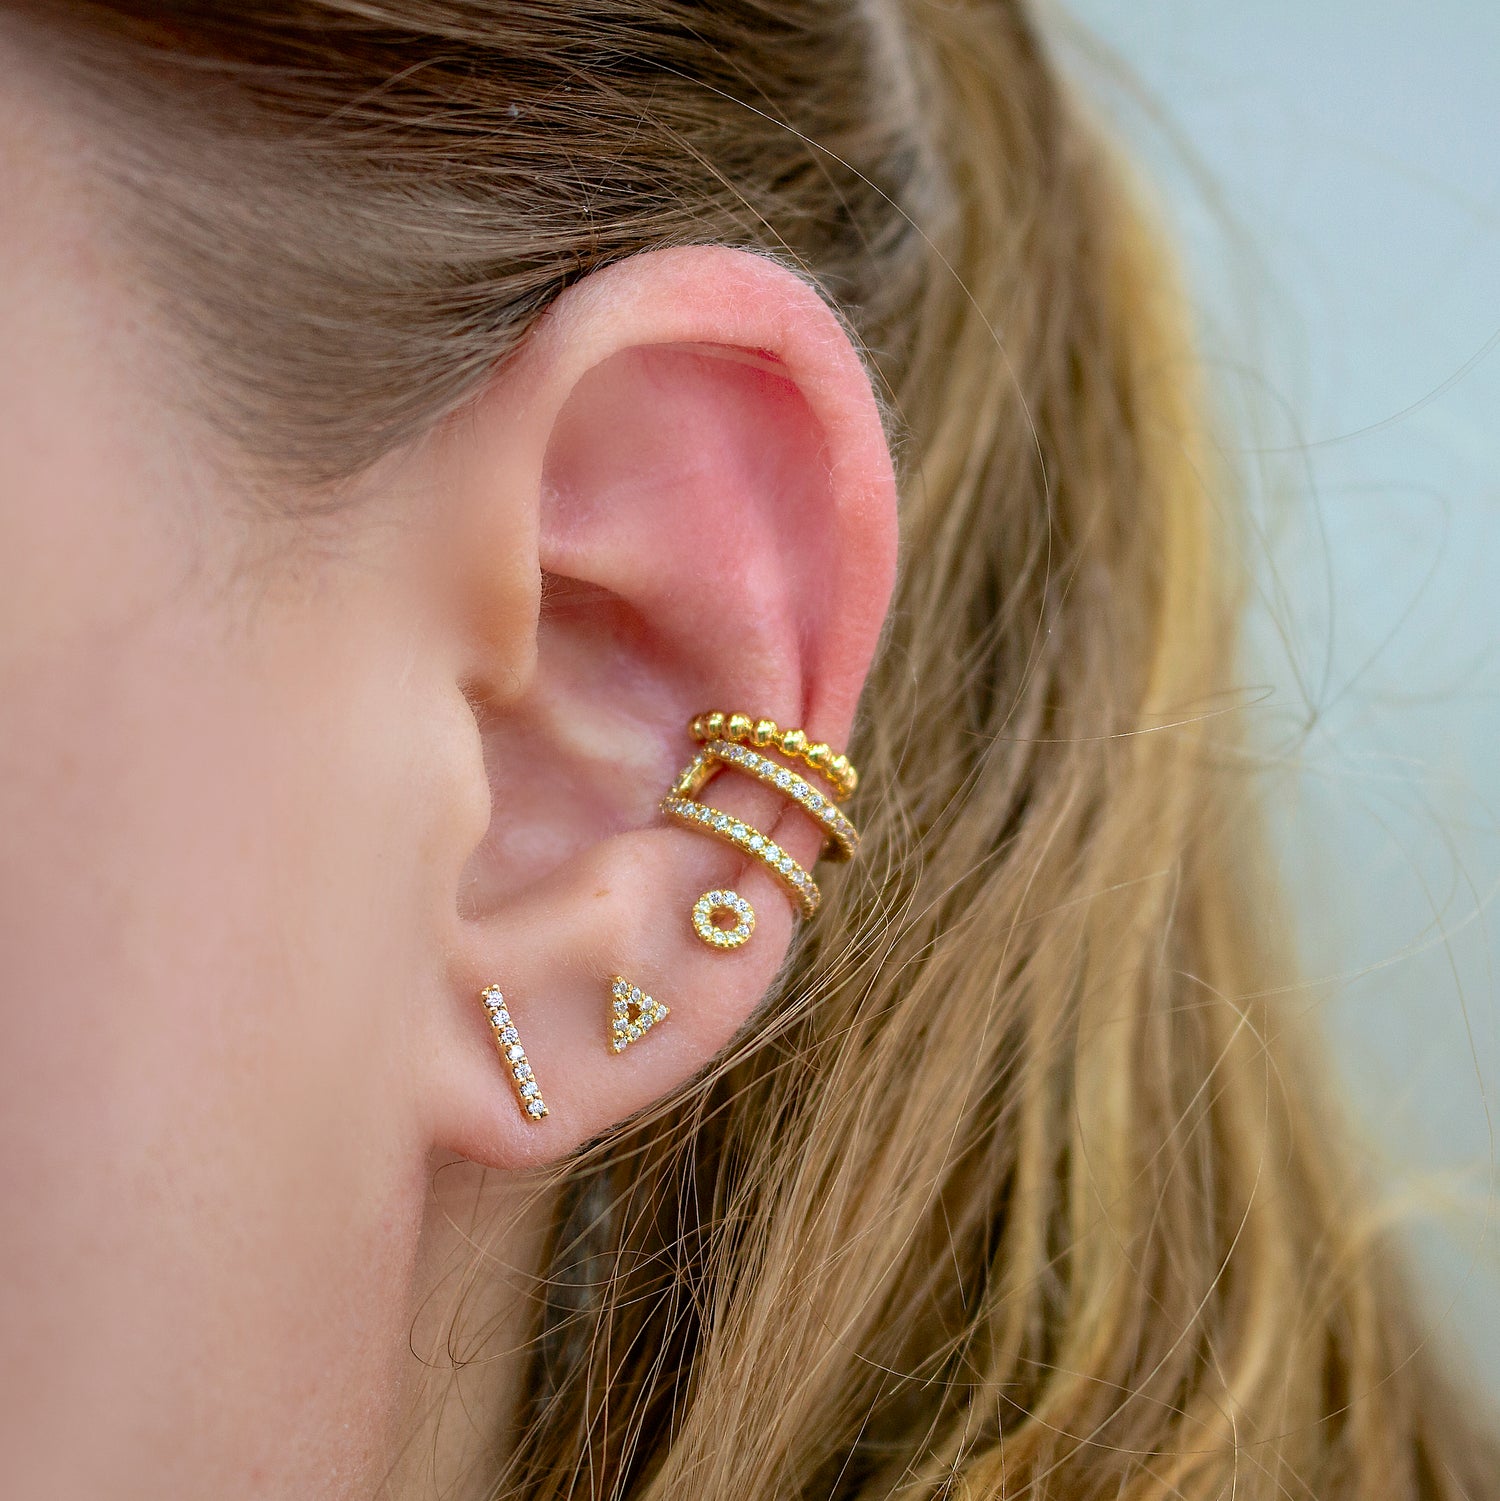 J&CO Jewellery Sparkly Petit Stud Earrings 3mm Gold